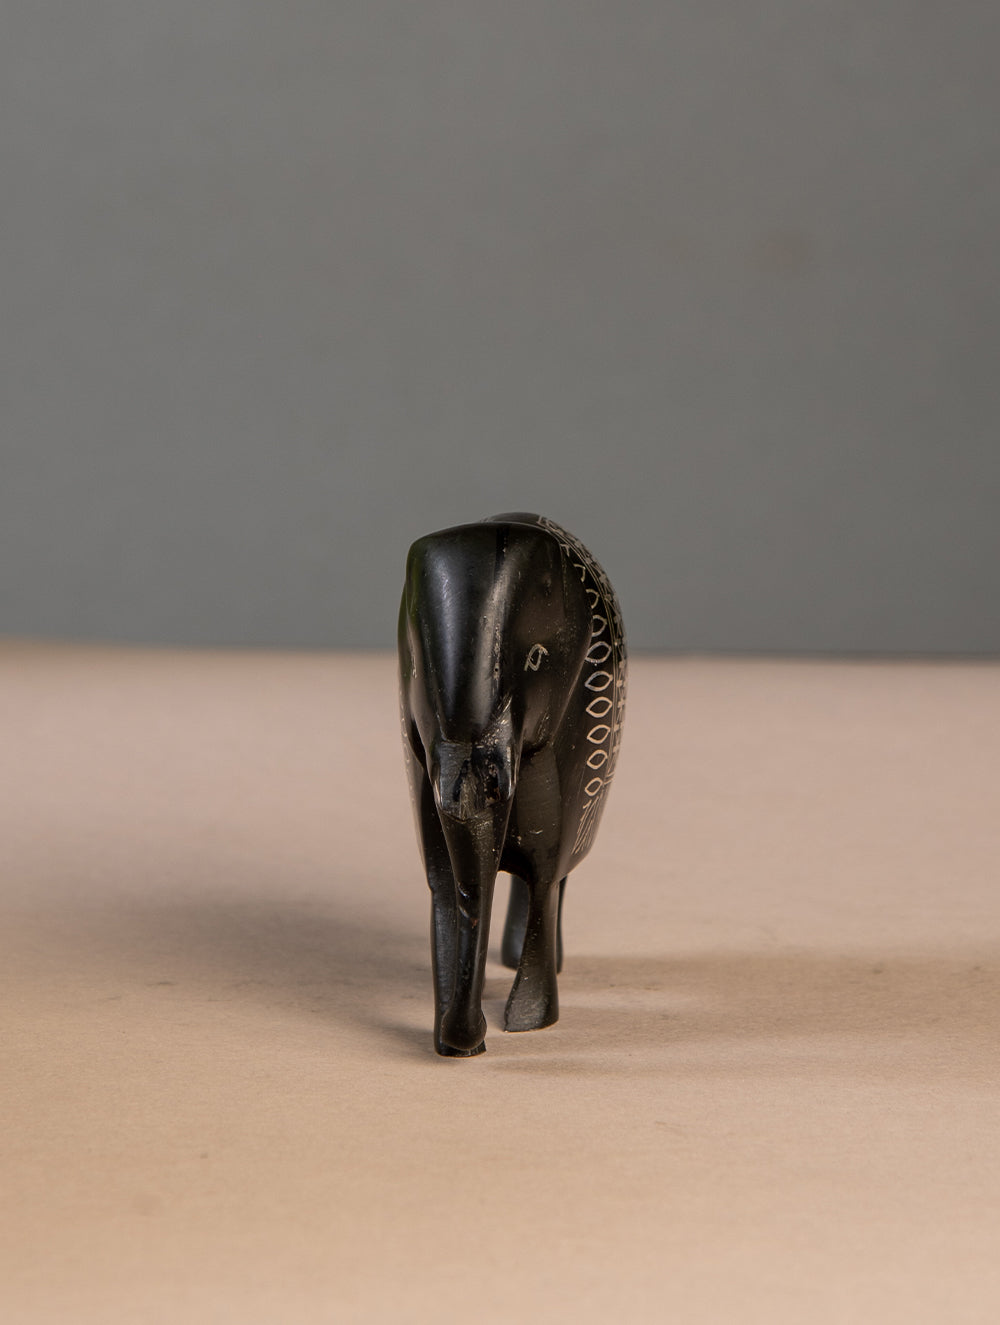 Load image into Gallery viewer, Bidri Craft Curio - Elephant (Set of 2)